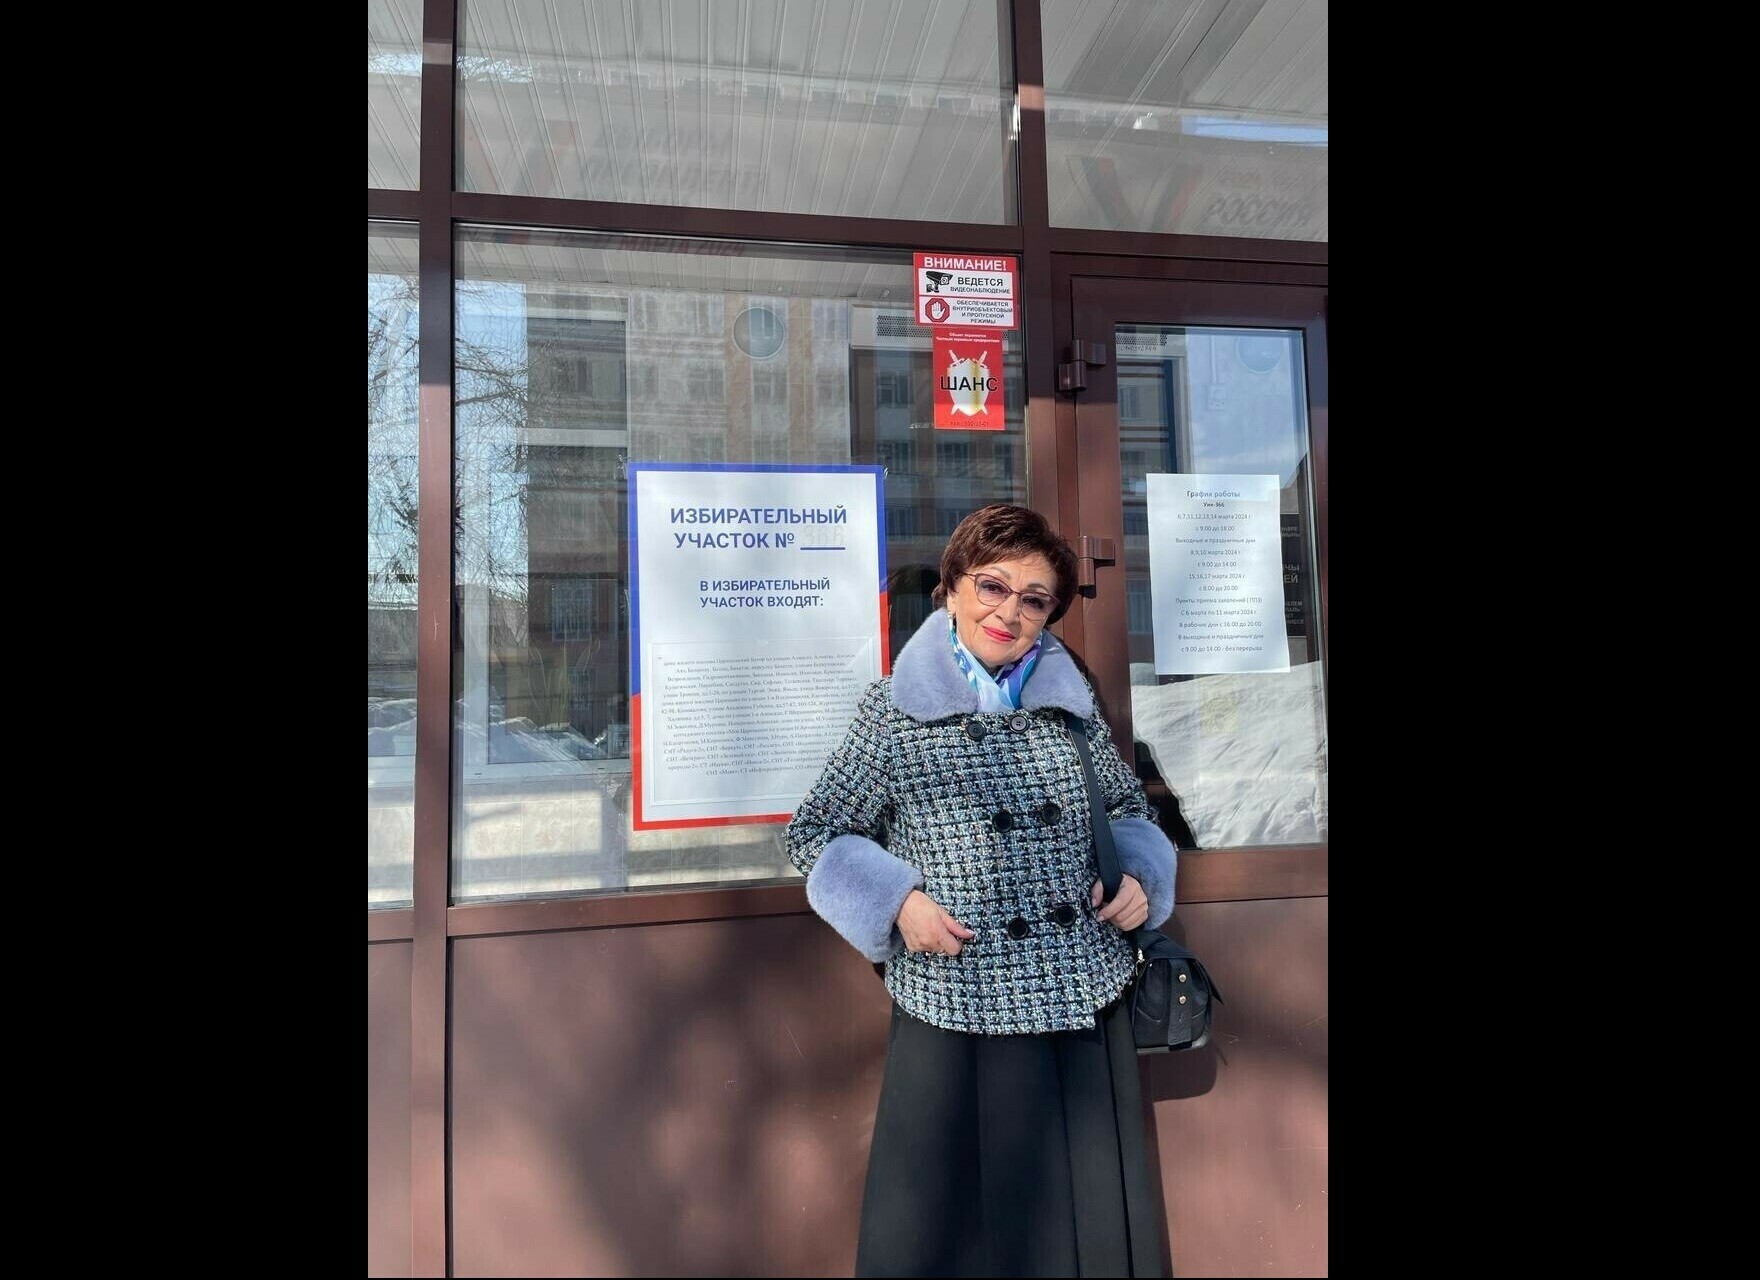 Народная артистка Татарстана Ганиева приняла участие в выборах Президента России